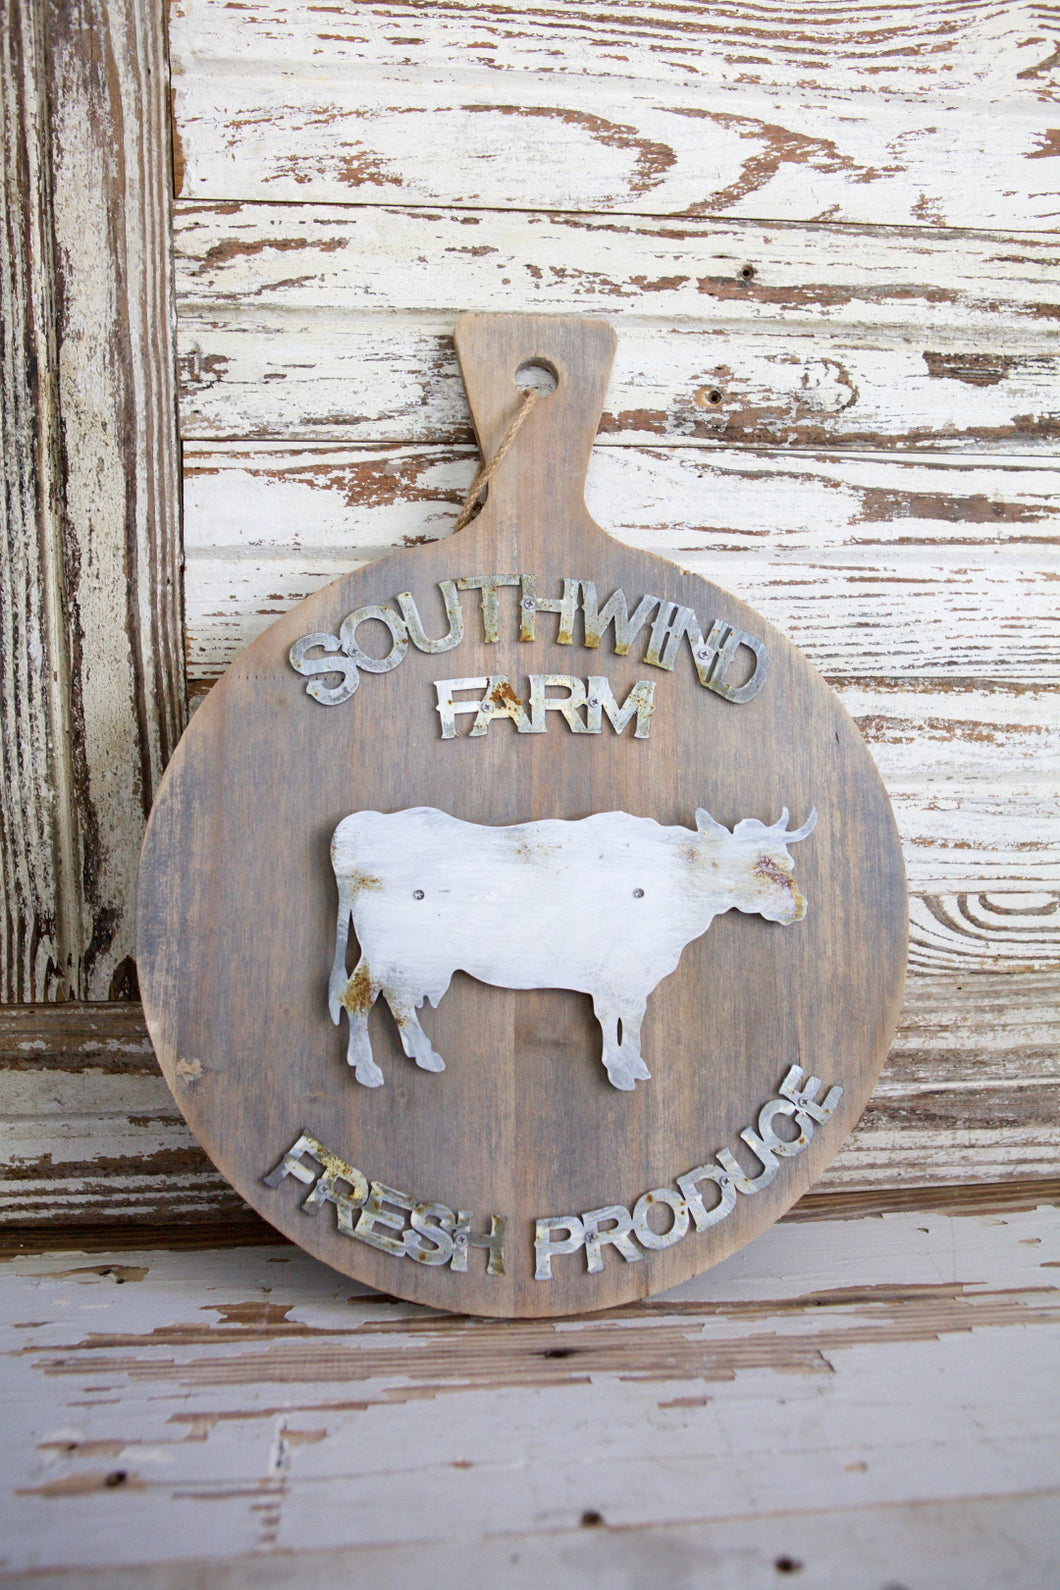 Southwind Farm Decorative Cutting Board